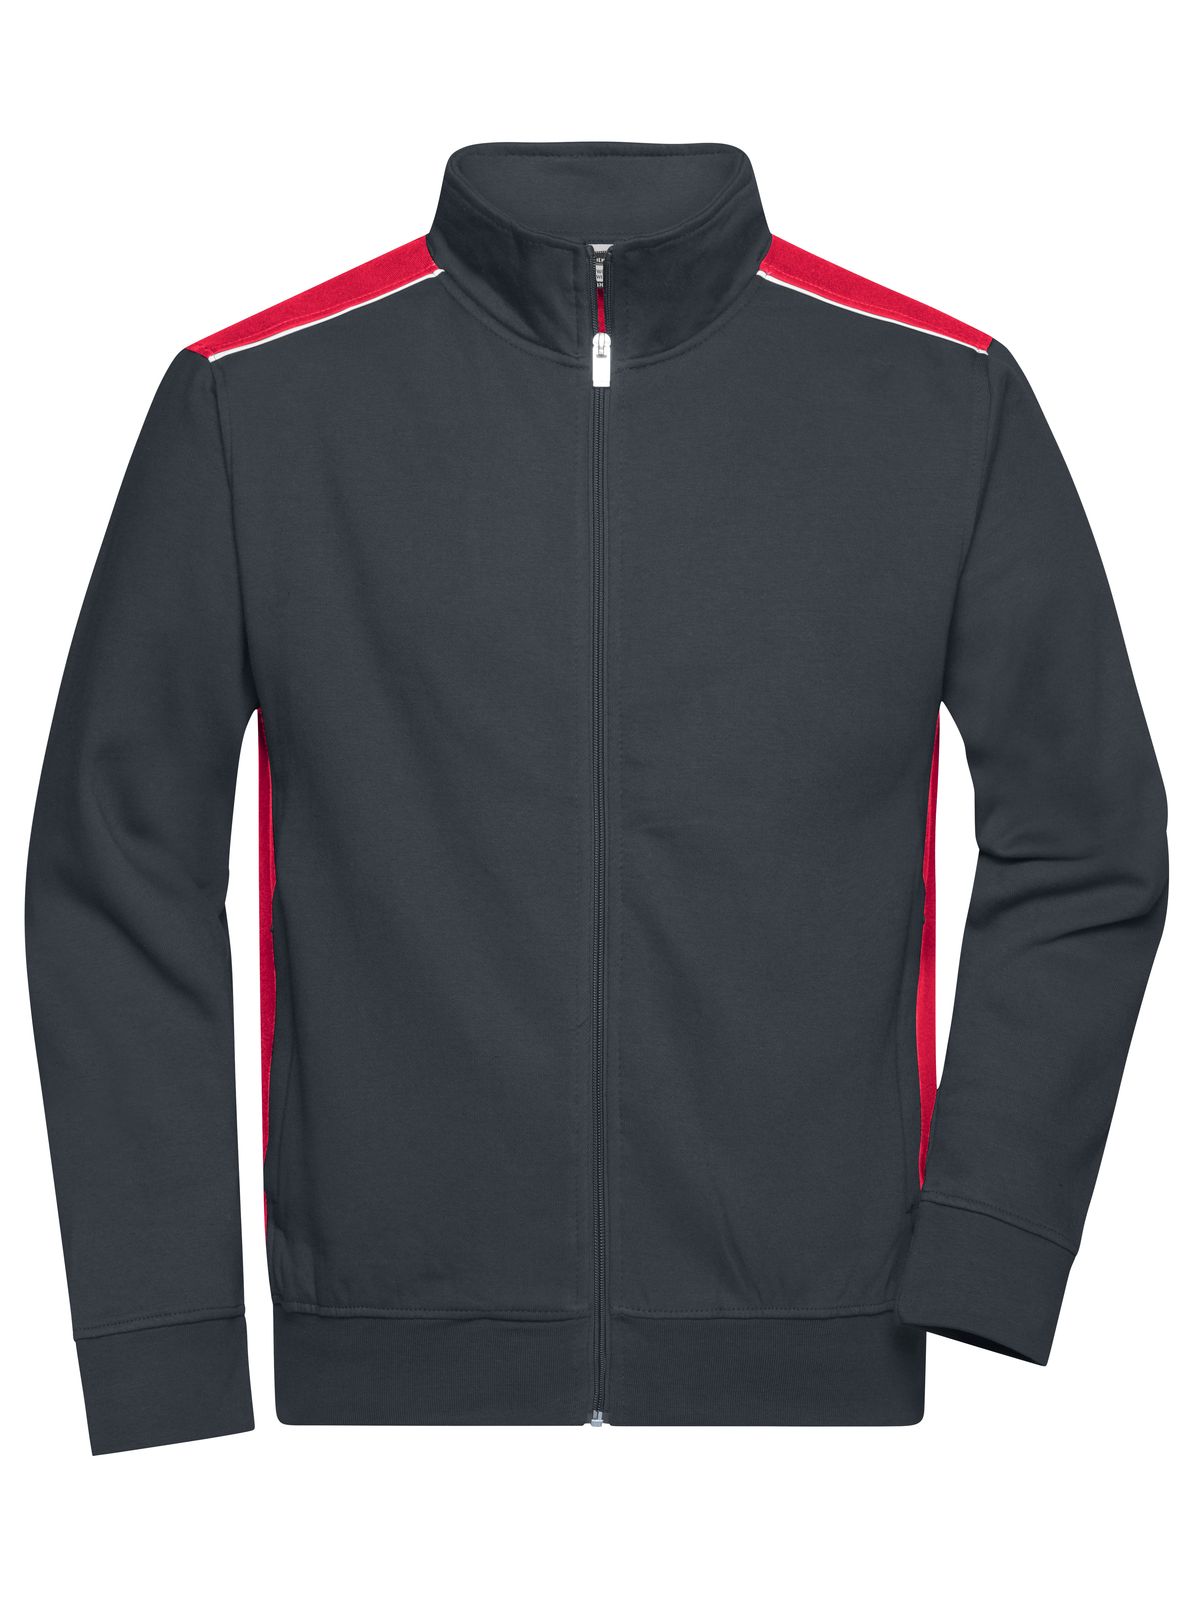 mens-workwear-sweat-jacket-color-carbon-red.webp